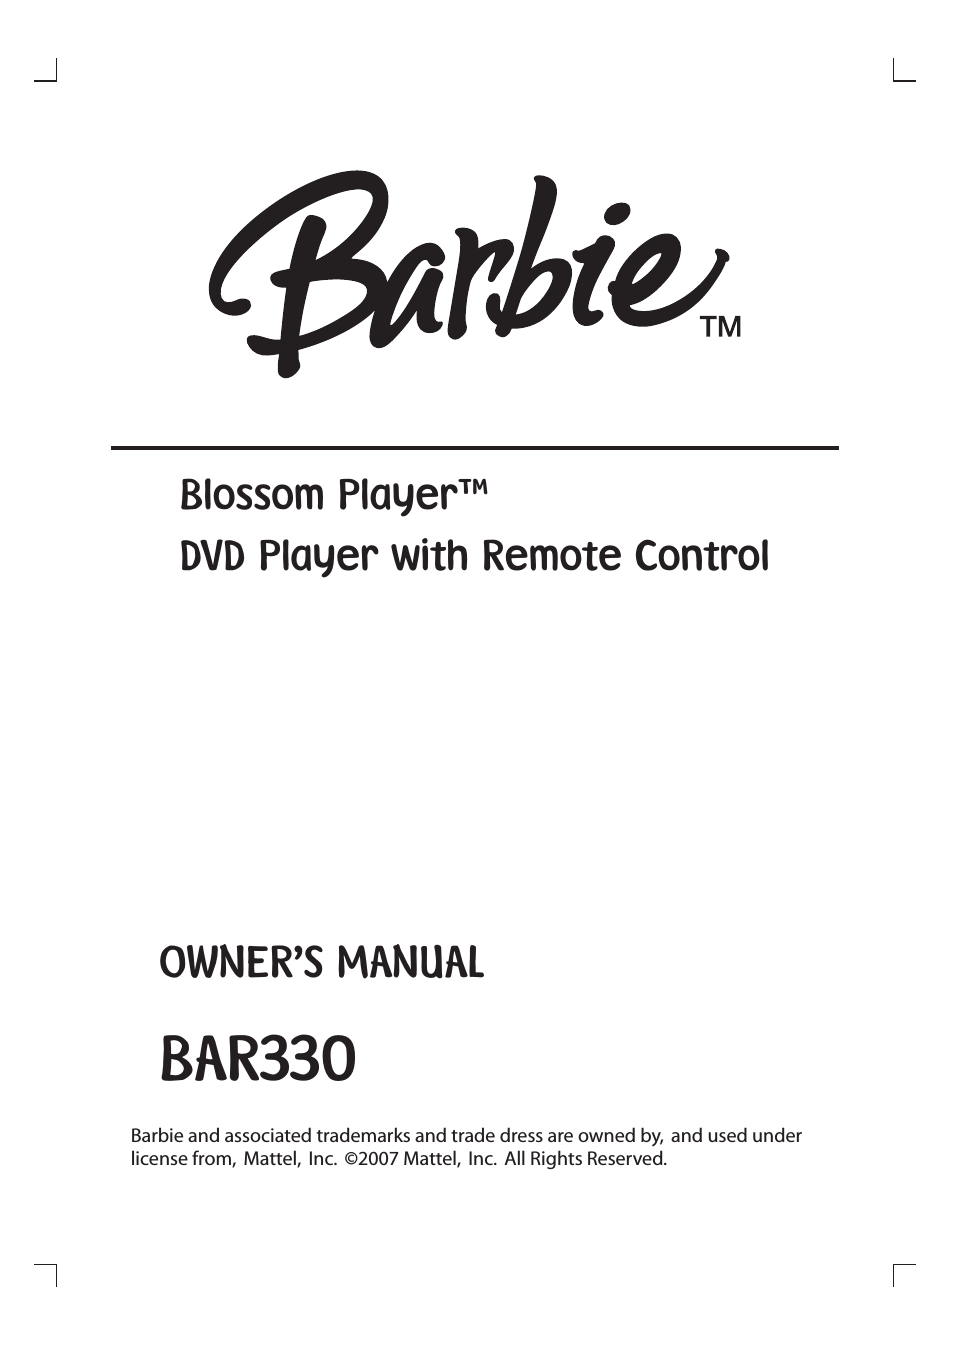 Barbie BAR330